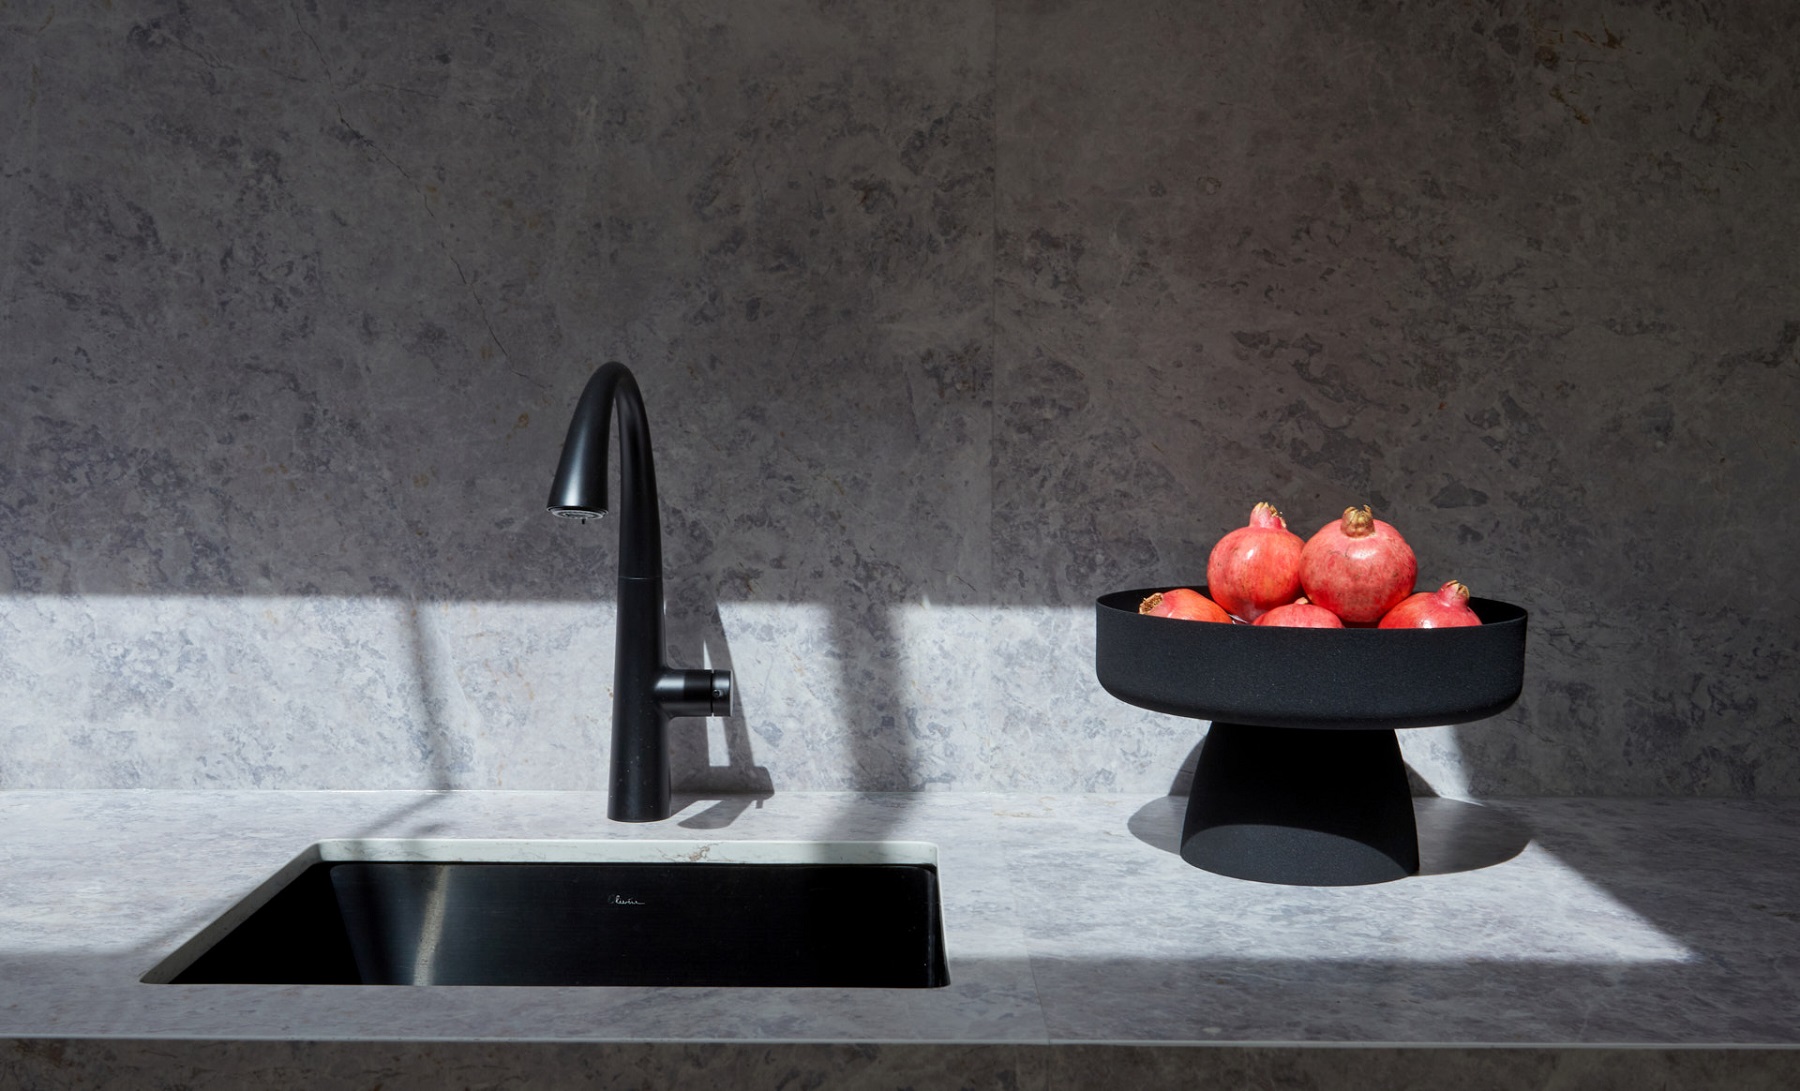 Annandale, Satin Polyurethane kitchen with a 40mm Smartstone Tundra Grigio stone benchtop and splashback